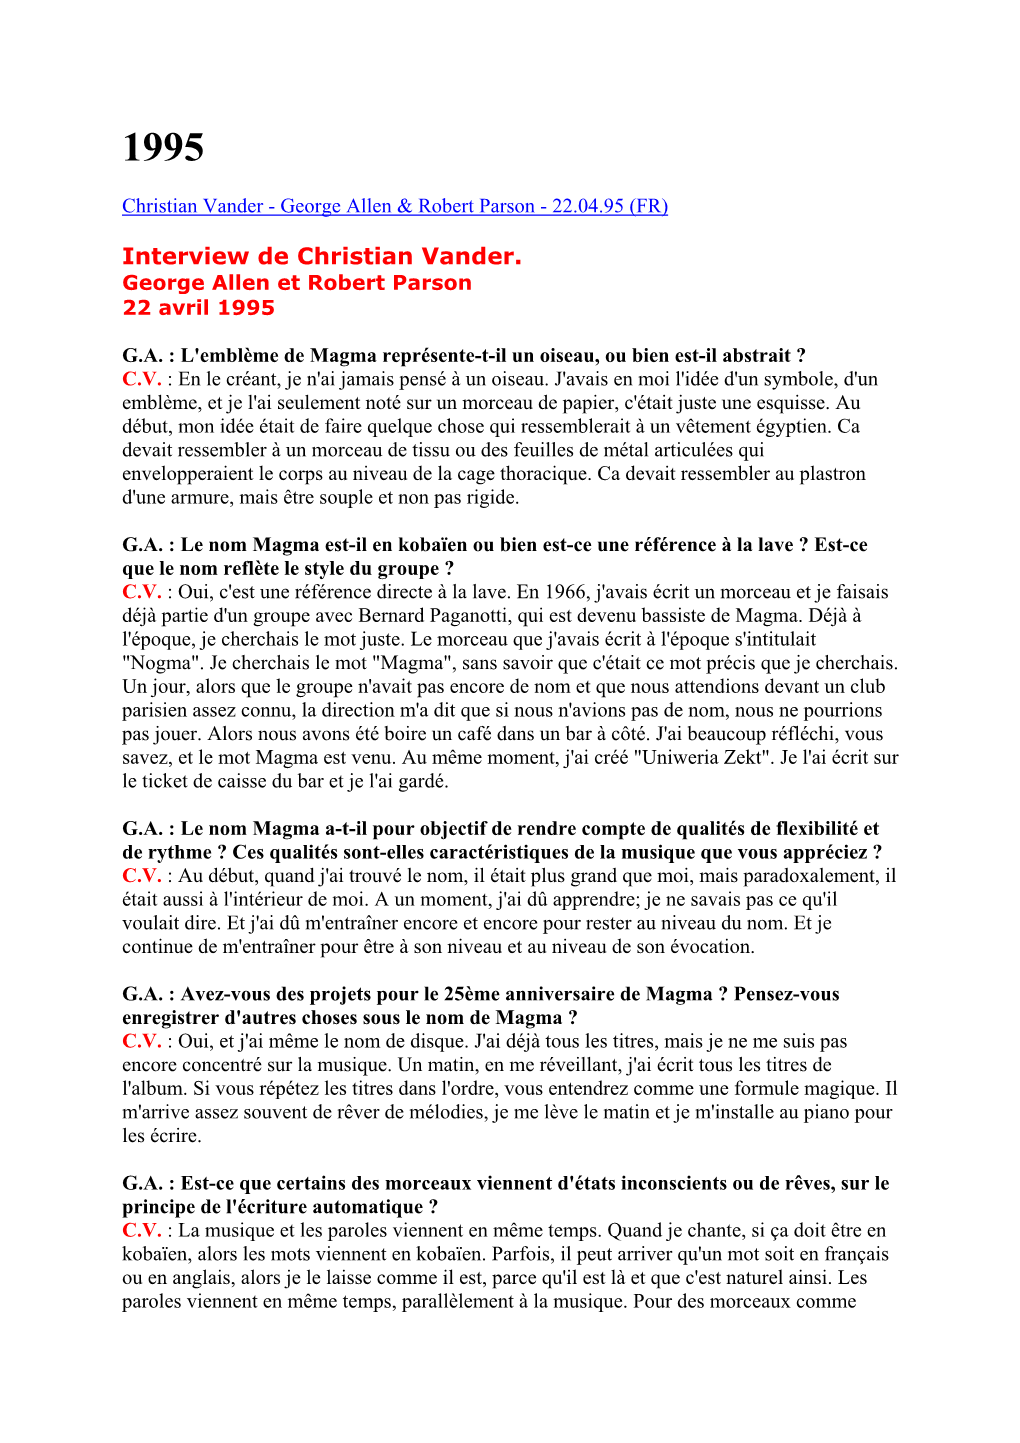 Interview De Christian Vander. George Allen Et Robert Parson 22 Avril 1995